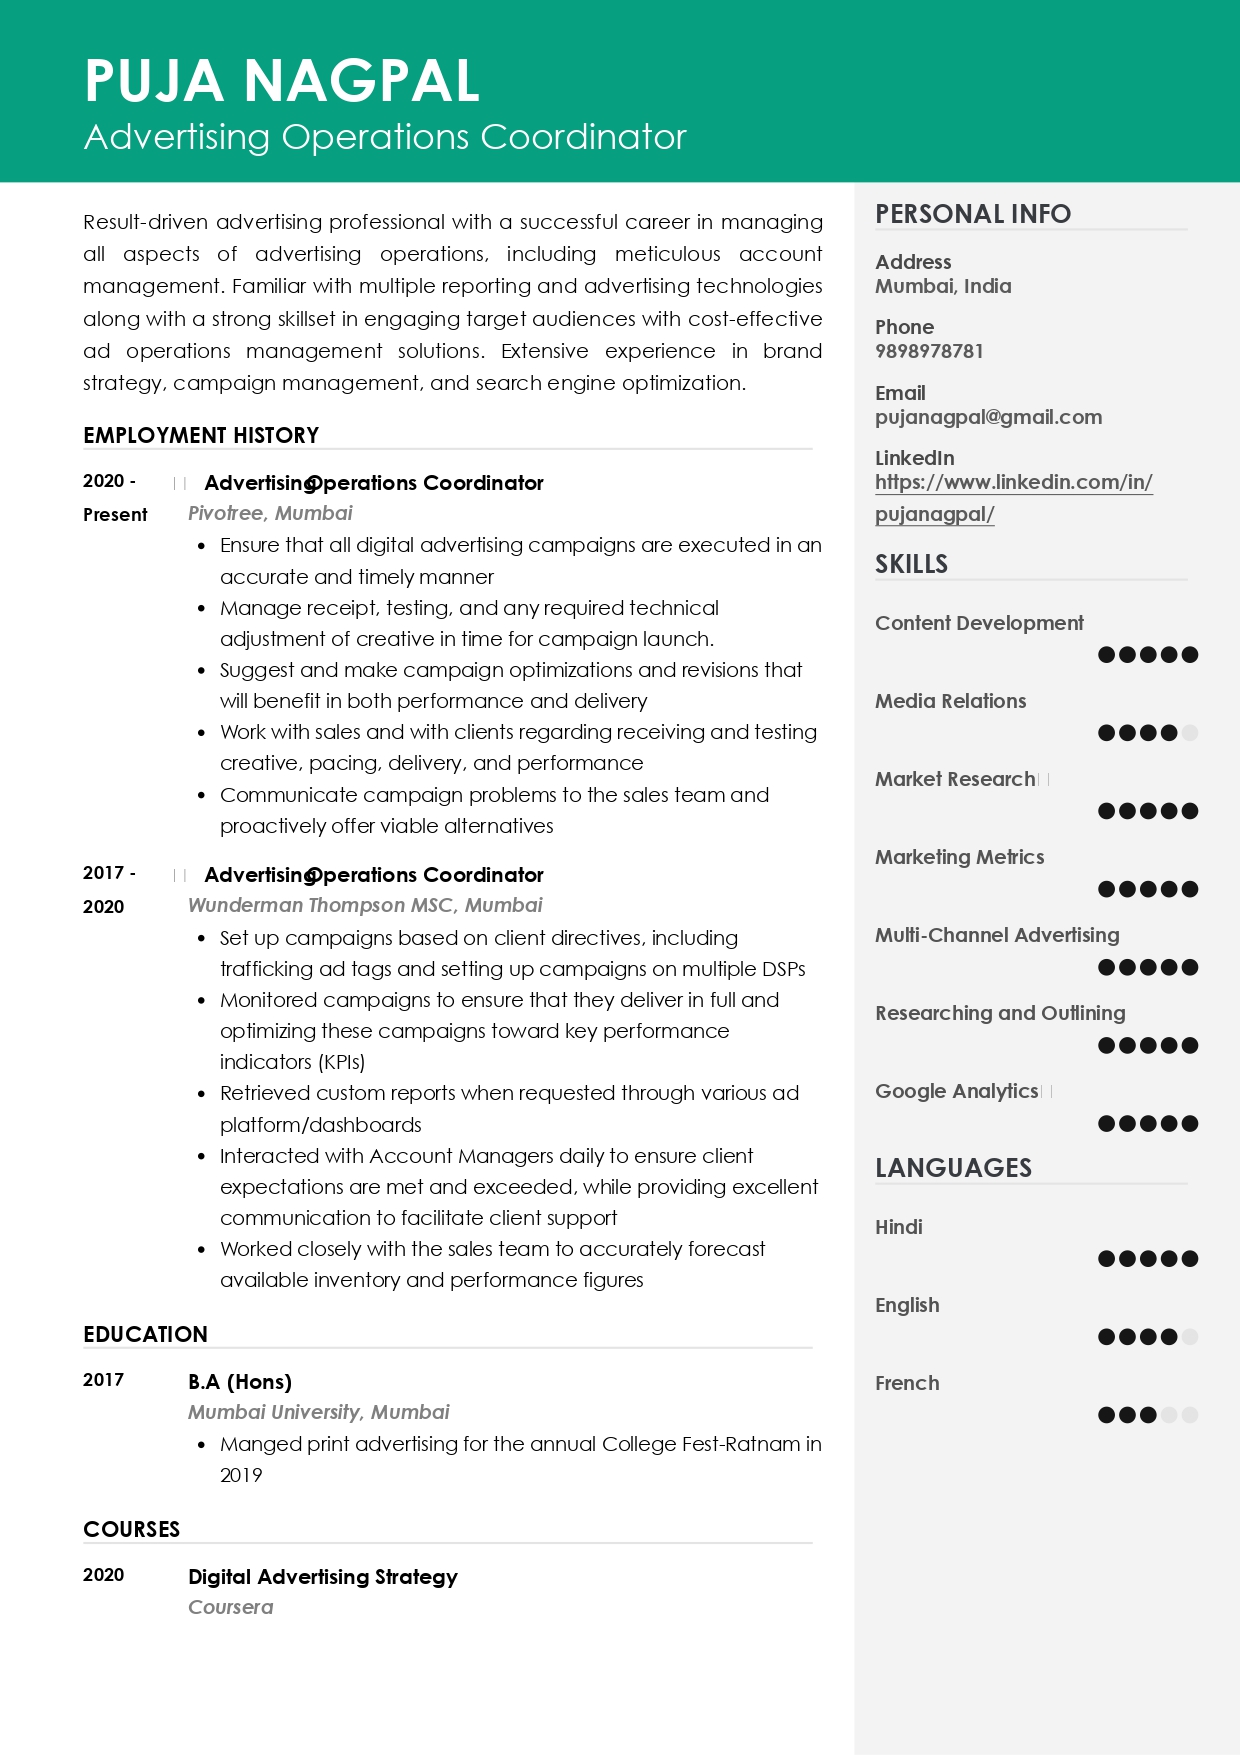 Resume of Advertising Operations Coordinator